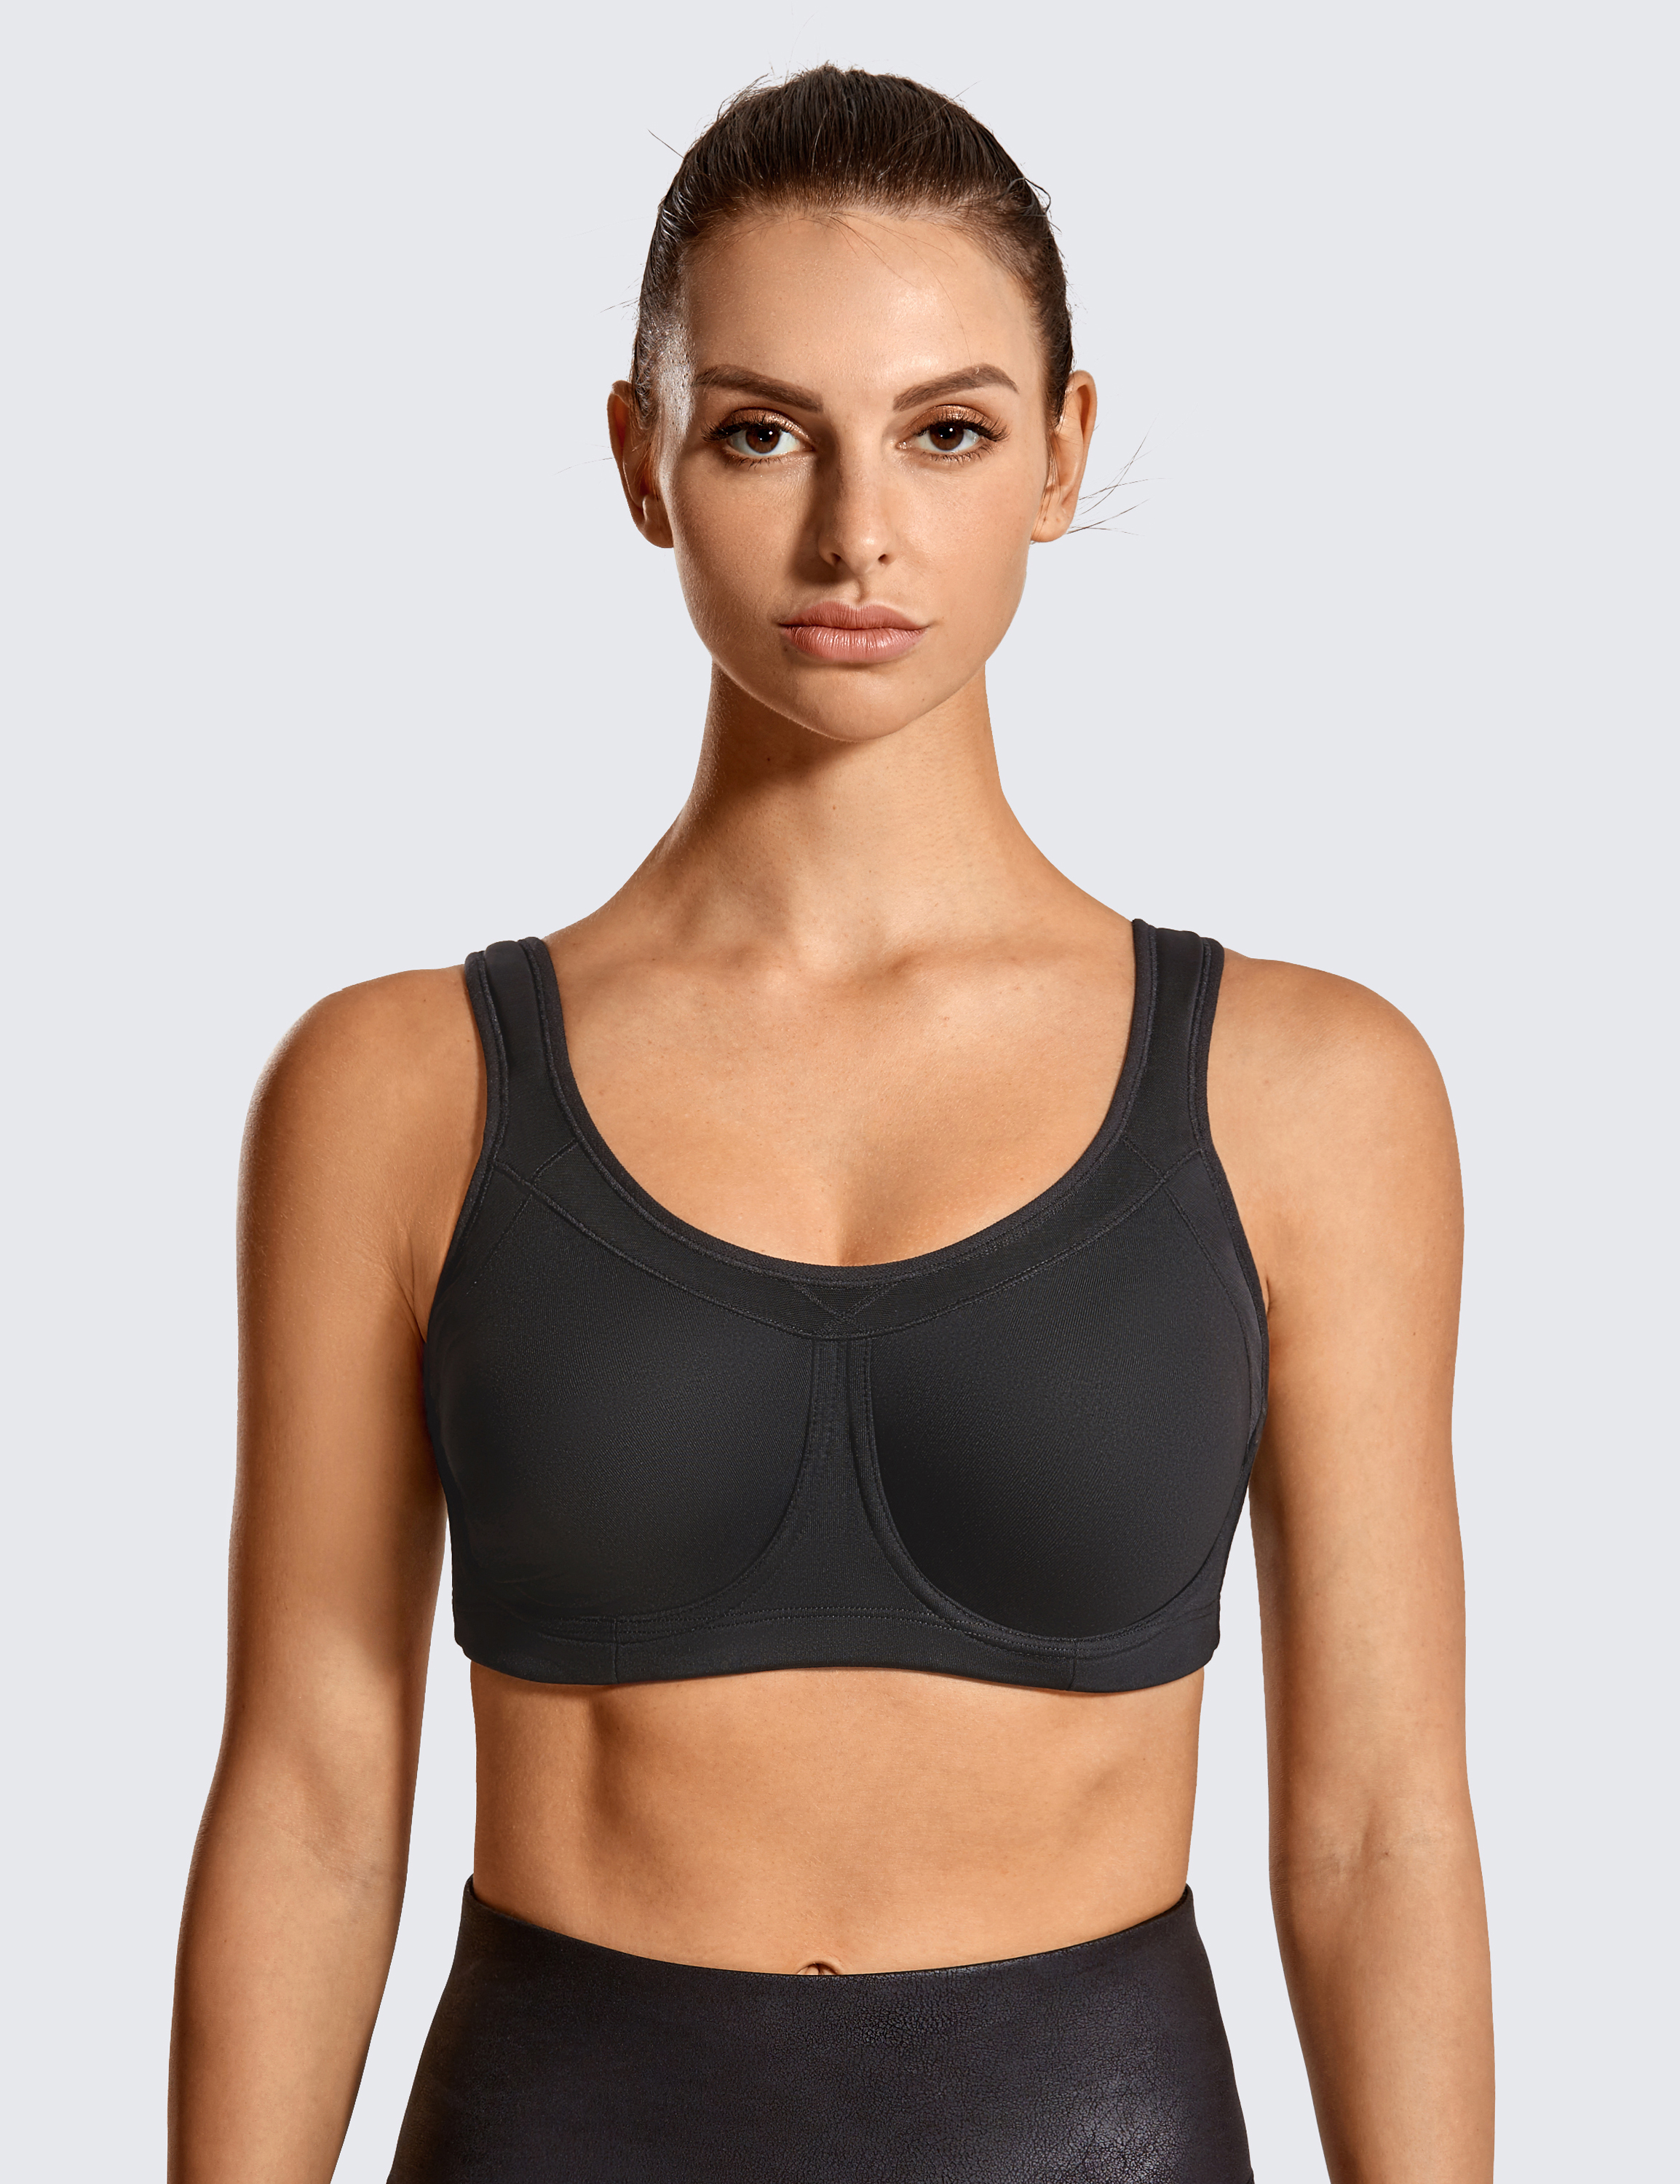 Syrokan velcro adjustable sport bra. Size 46D - $15 - From Yocasta